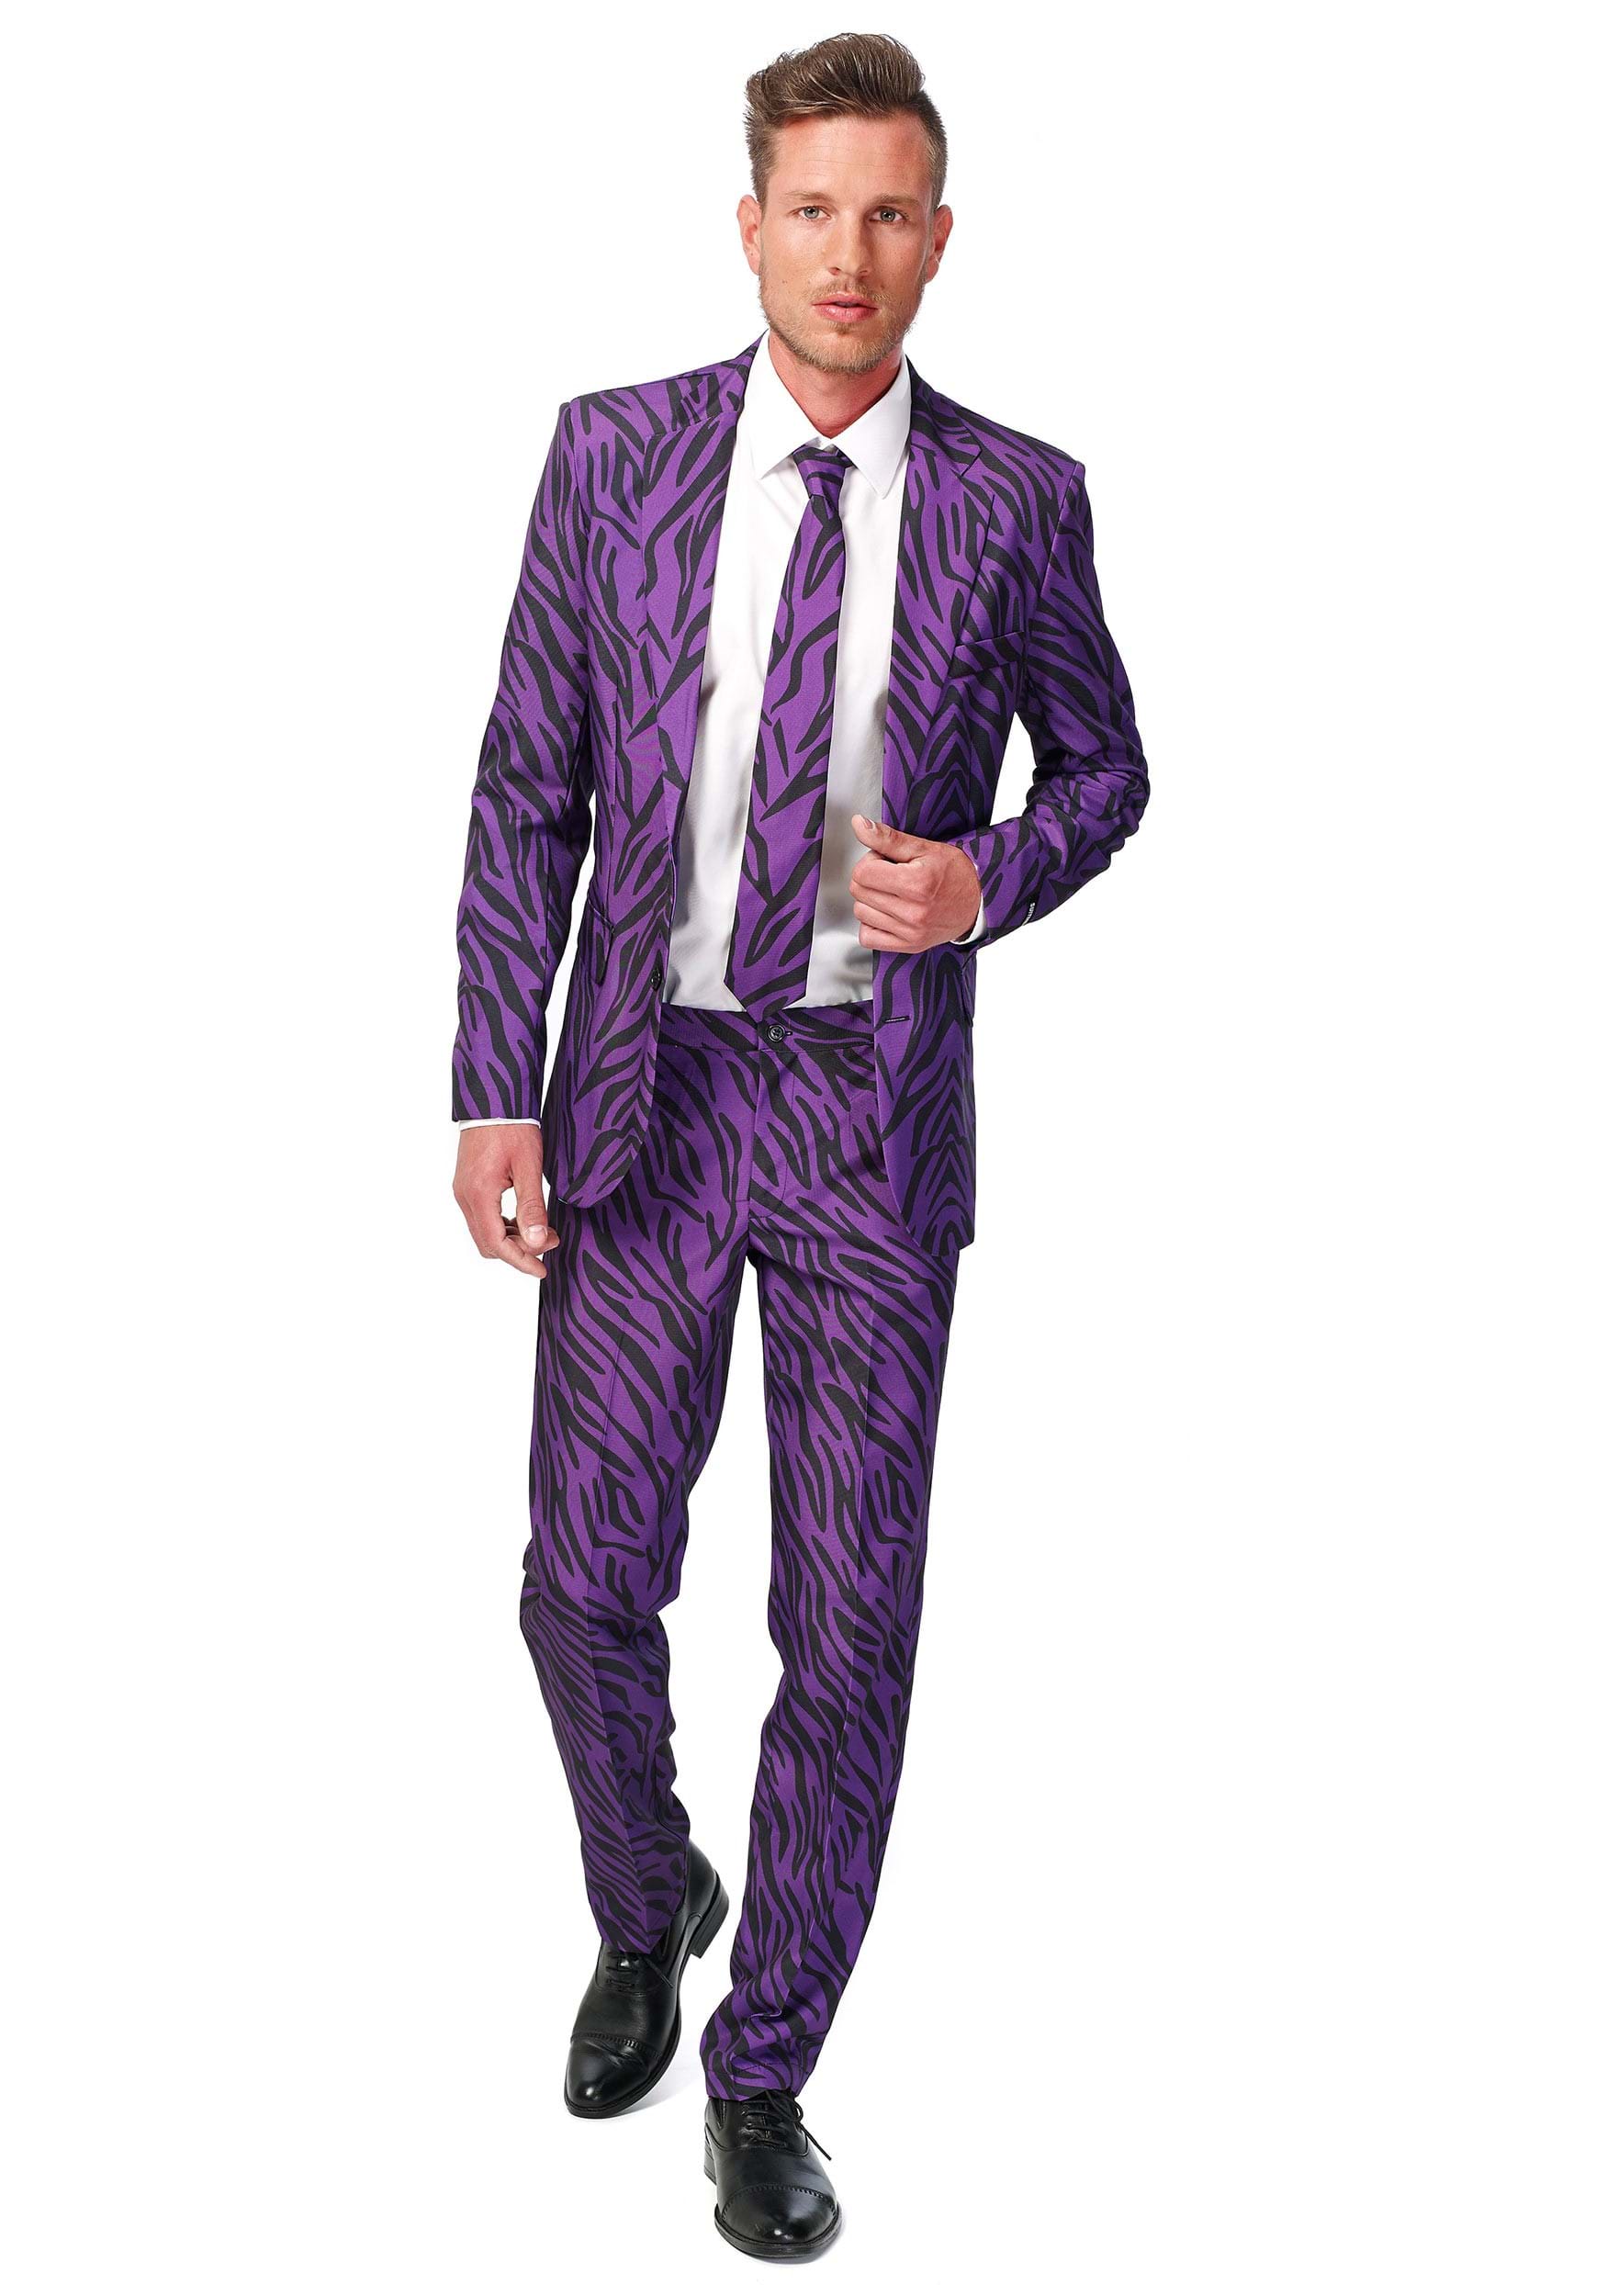 Suitmeister Basic Pimp Tiger Suit Costume for Men